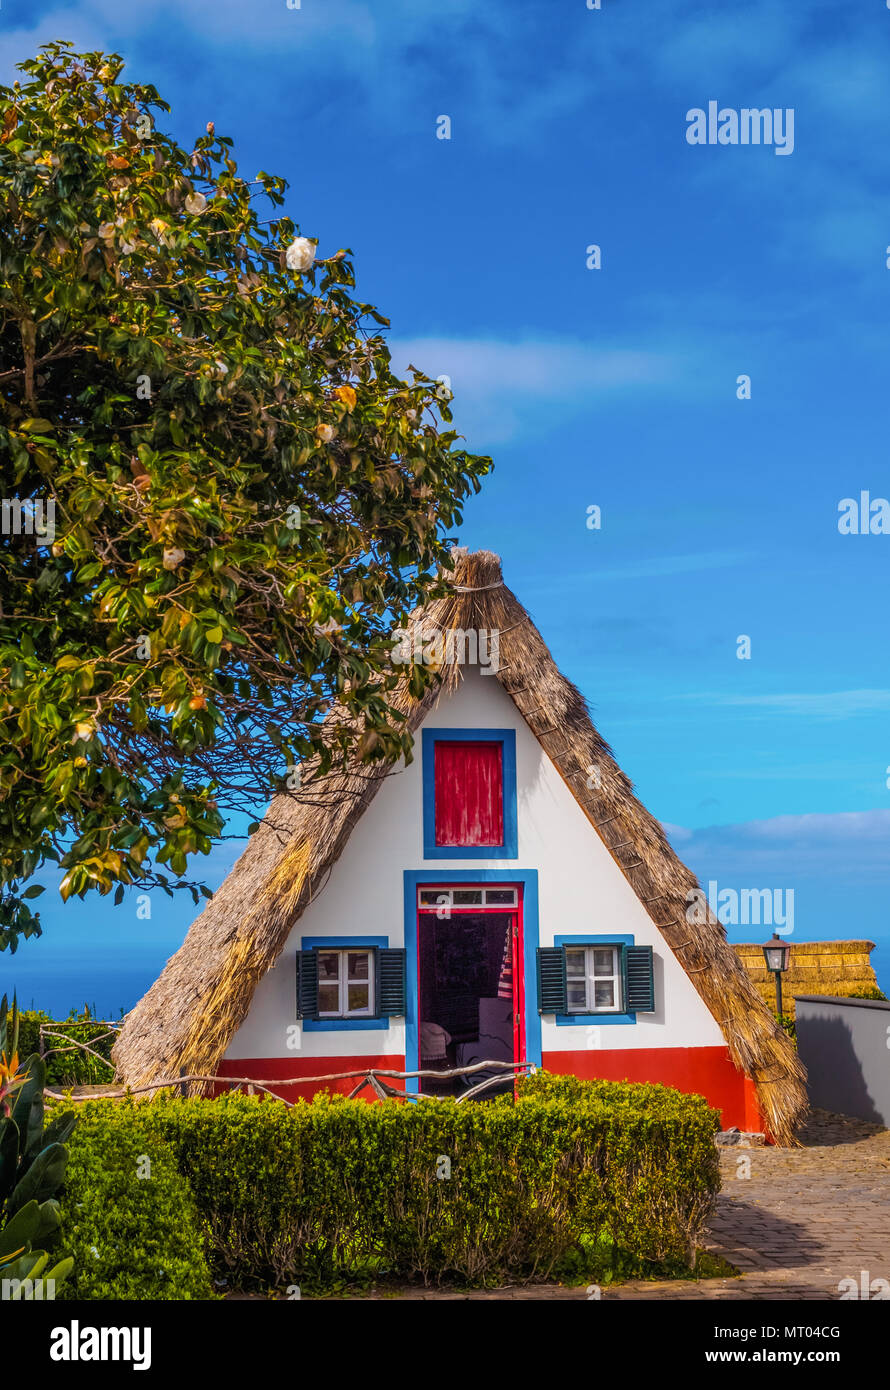 Casa tradicional del pueblo de Santana en vertical, Camache de Freitas - Madeira isla de Portugal Foto de stock